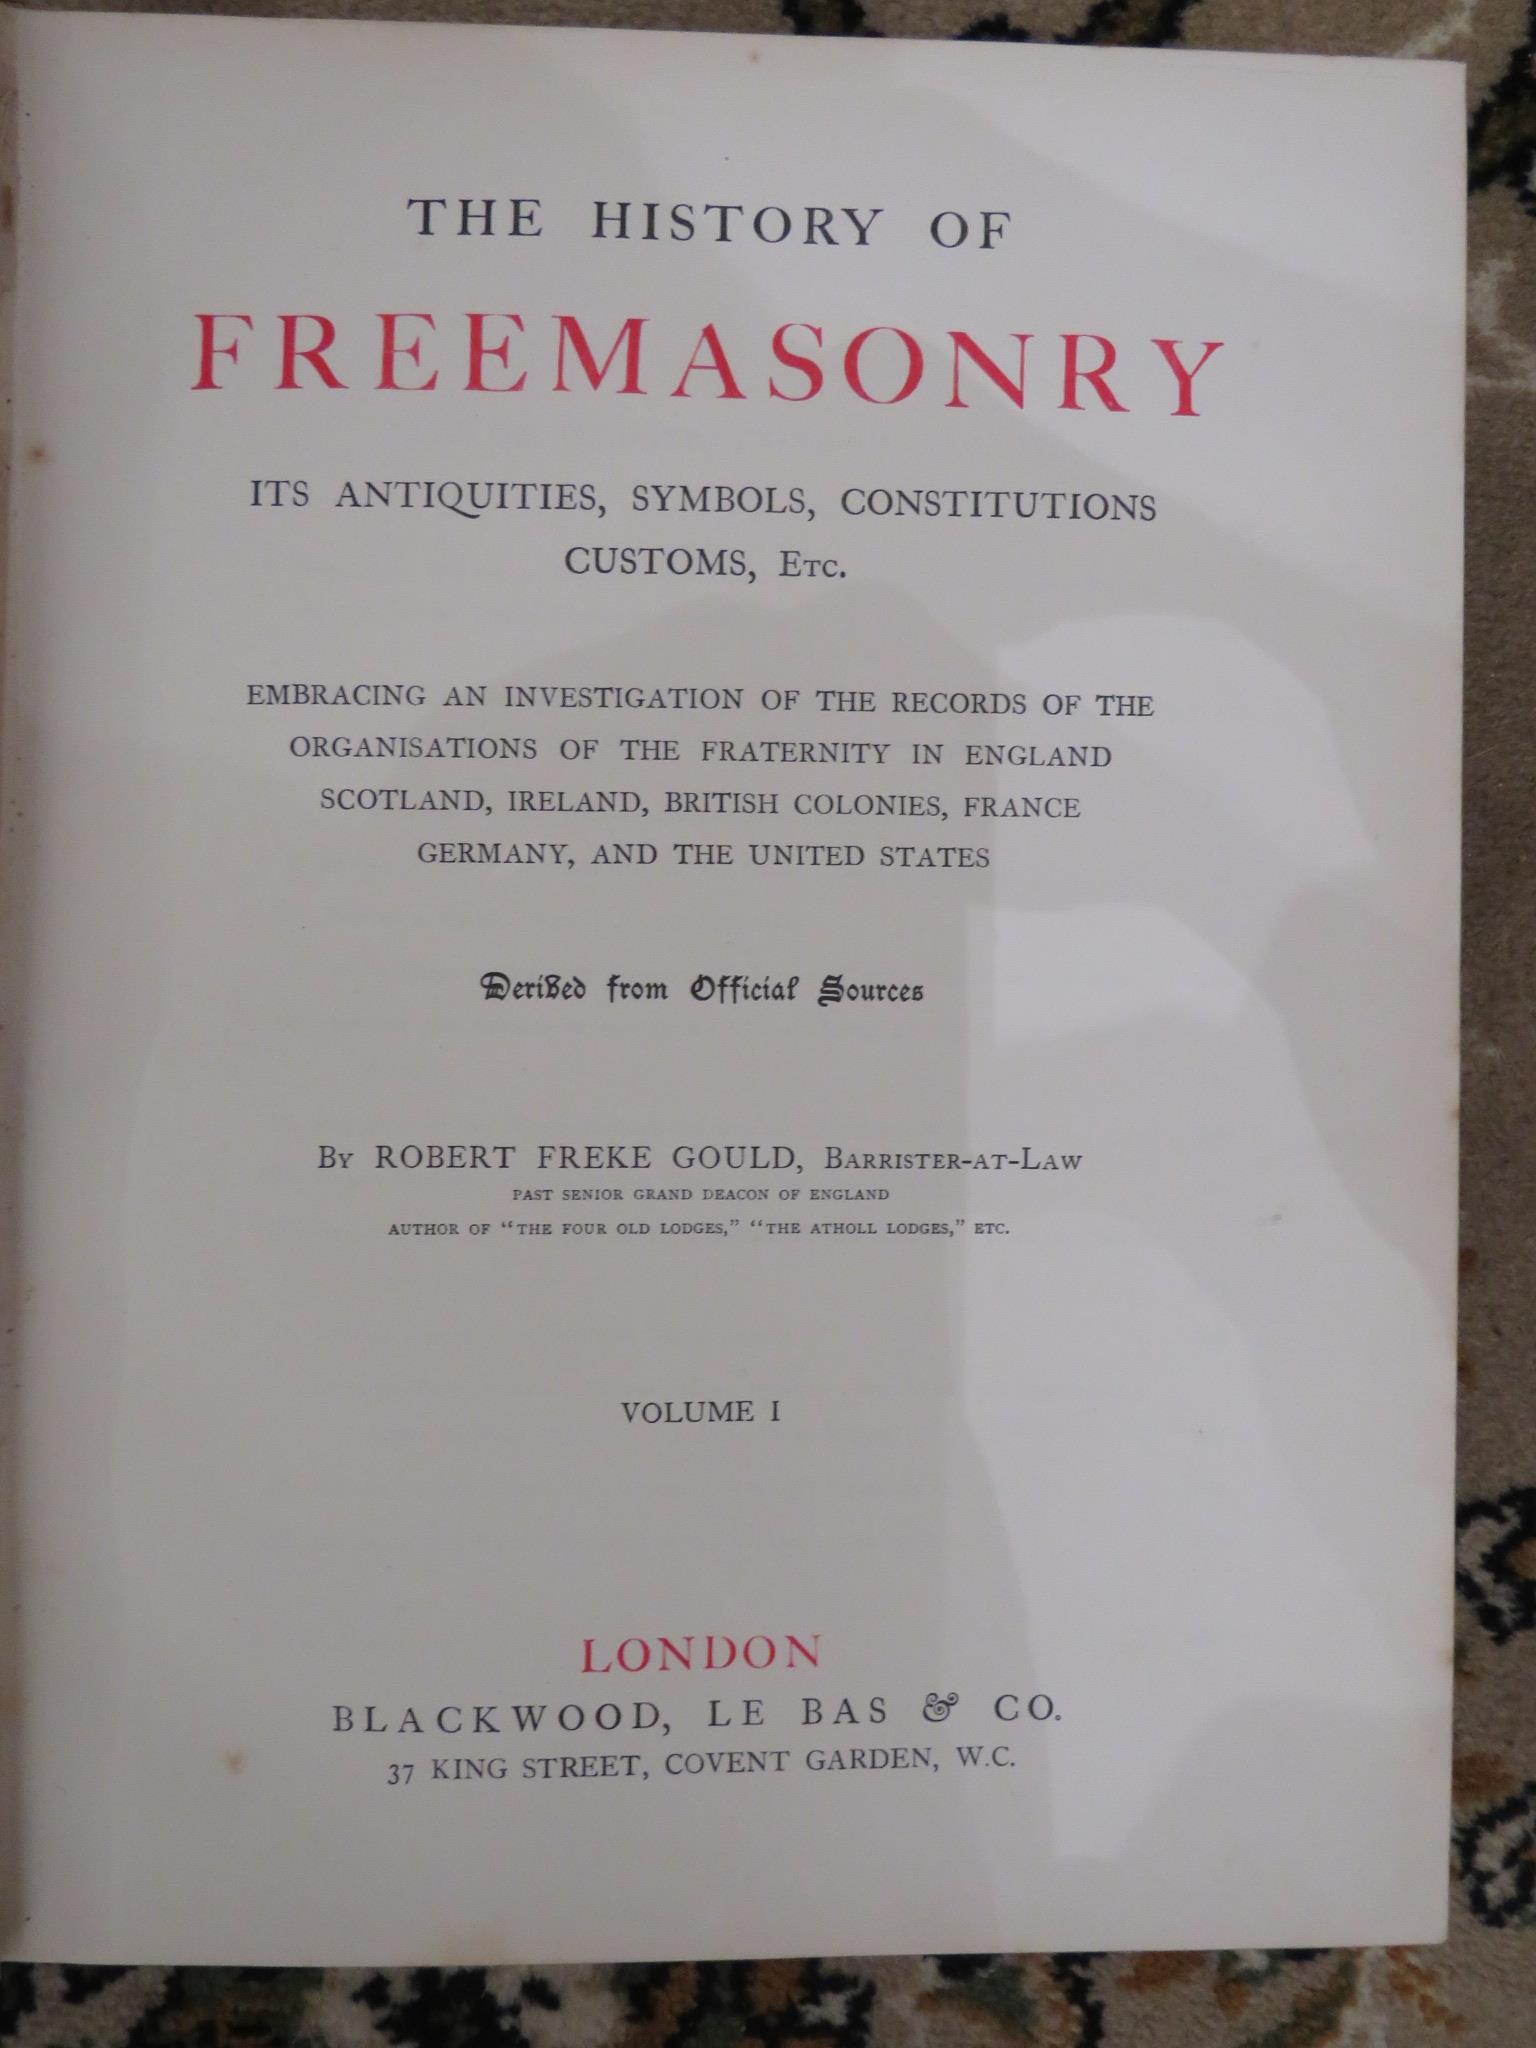 ROBERT FREKE GOULD - THE HISTORY OF FREEMASONRY, THREE VOLUMES, LONDON, BLACKWOOD, LE BAS & CO - Image 3 of 3